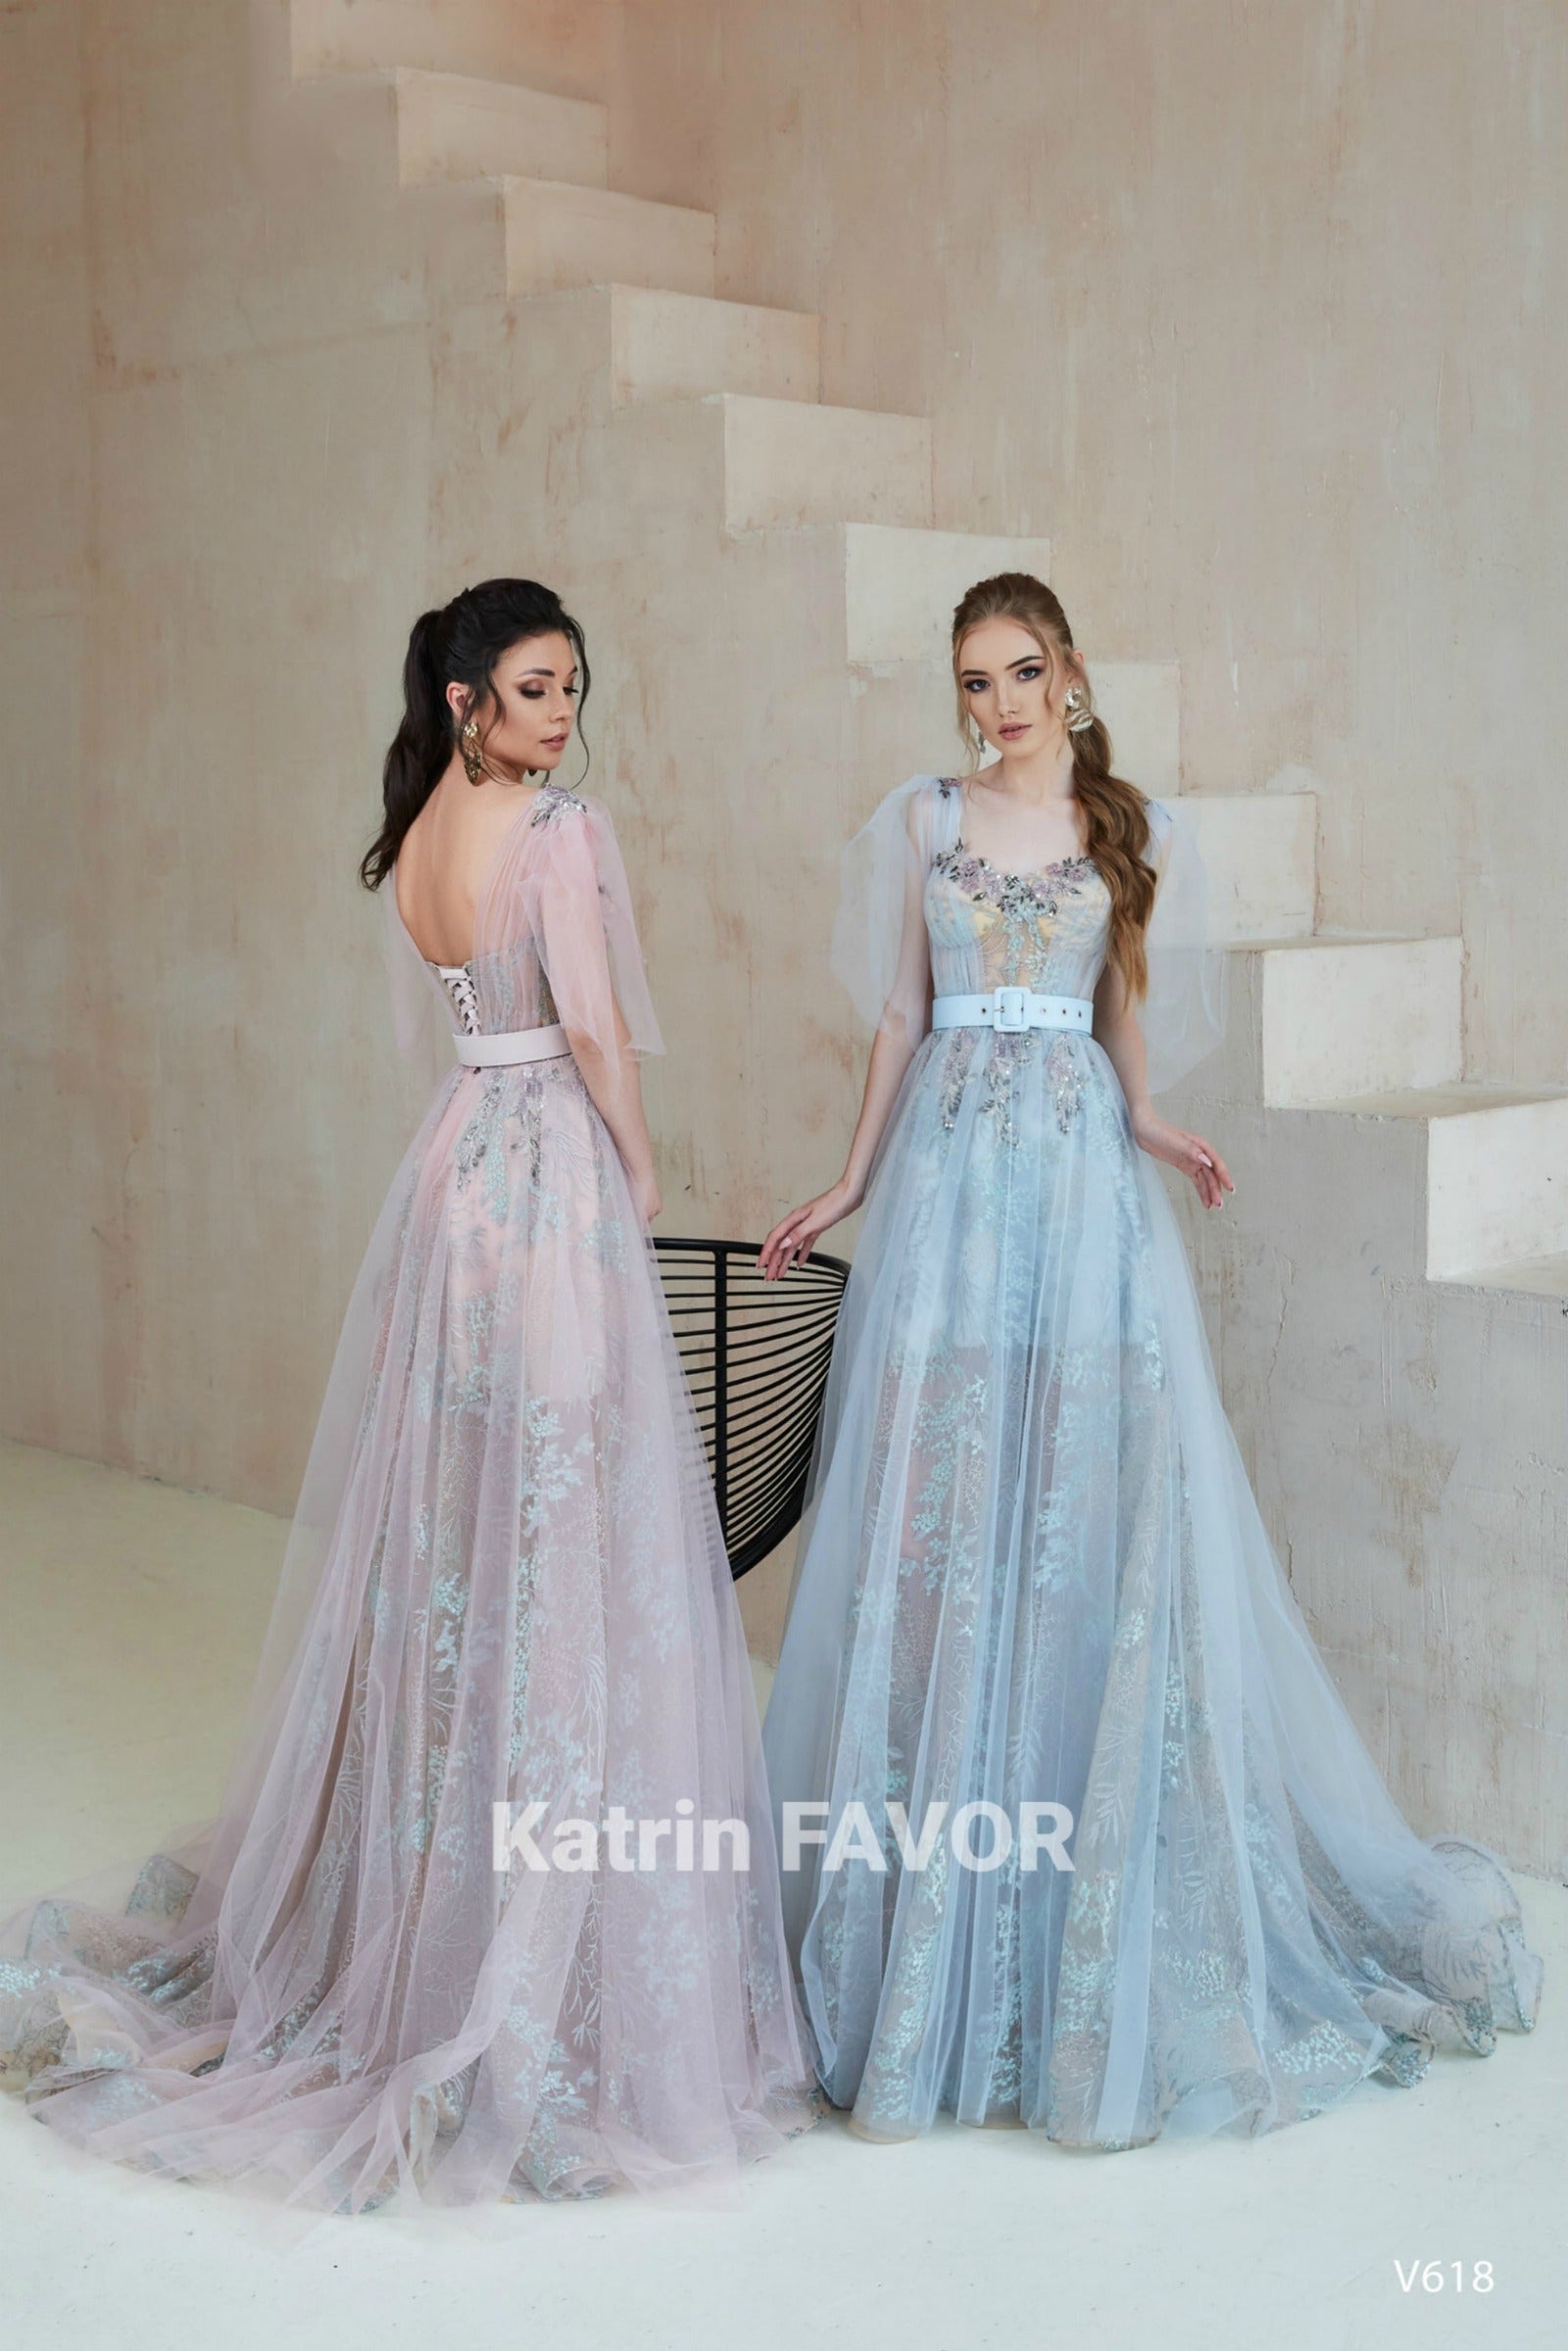 KatrinFAVORboutique-Floral embroidered cottagecore dress